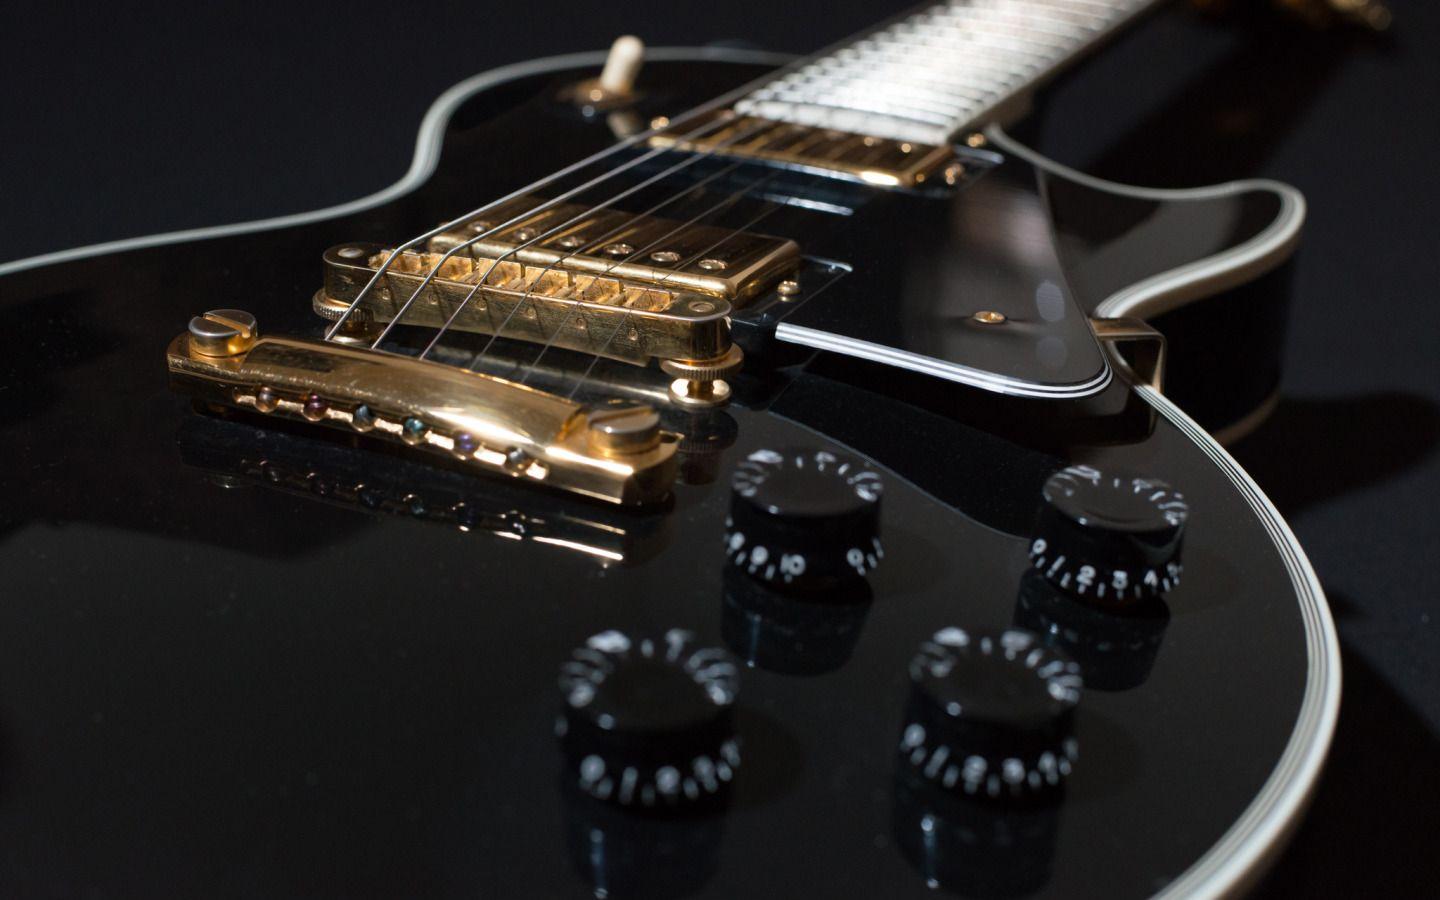 Black Electric Guitar